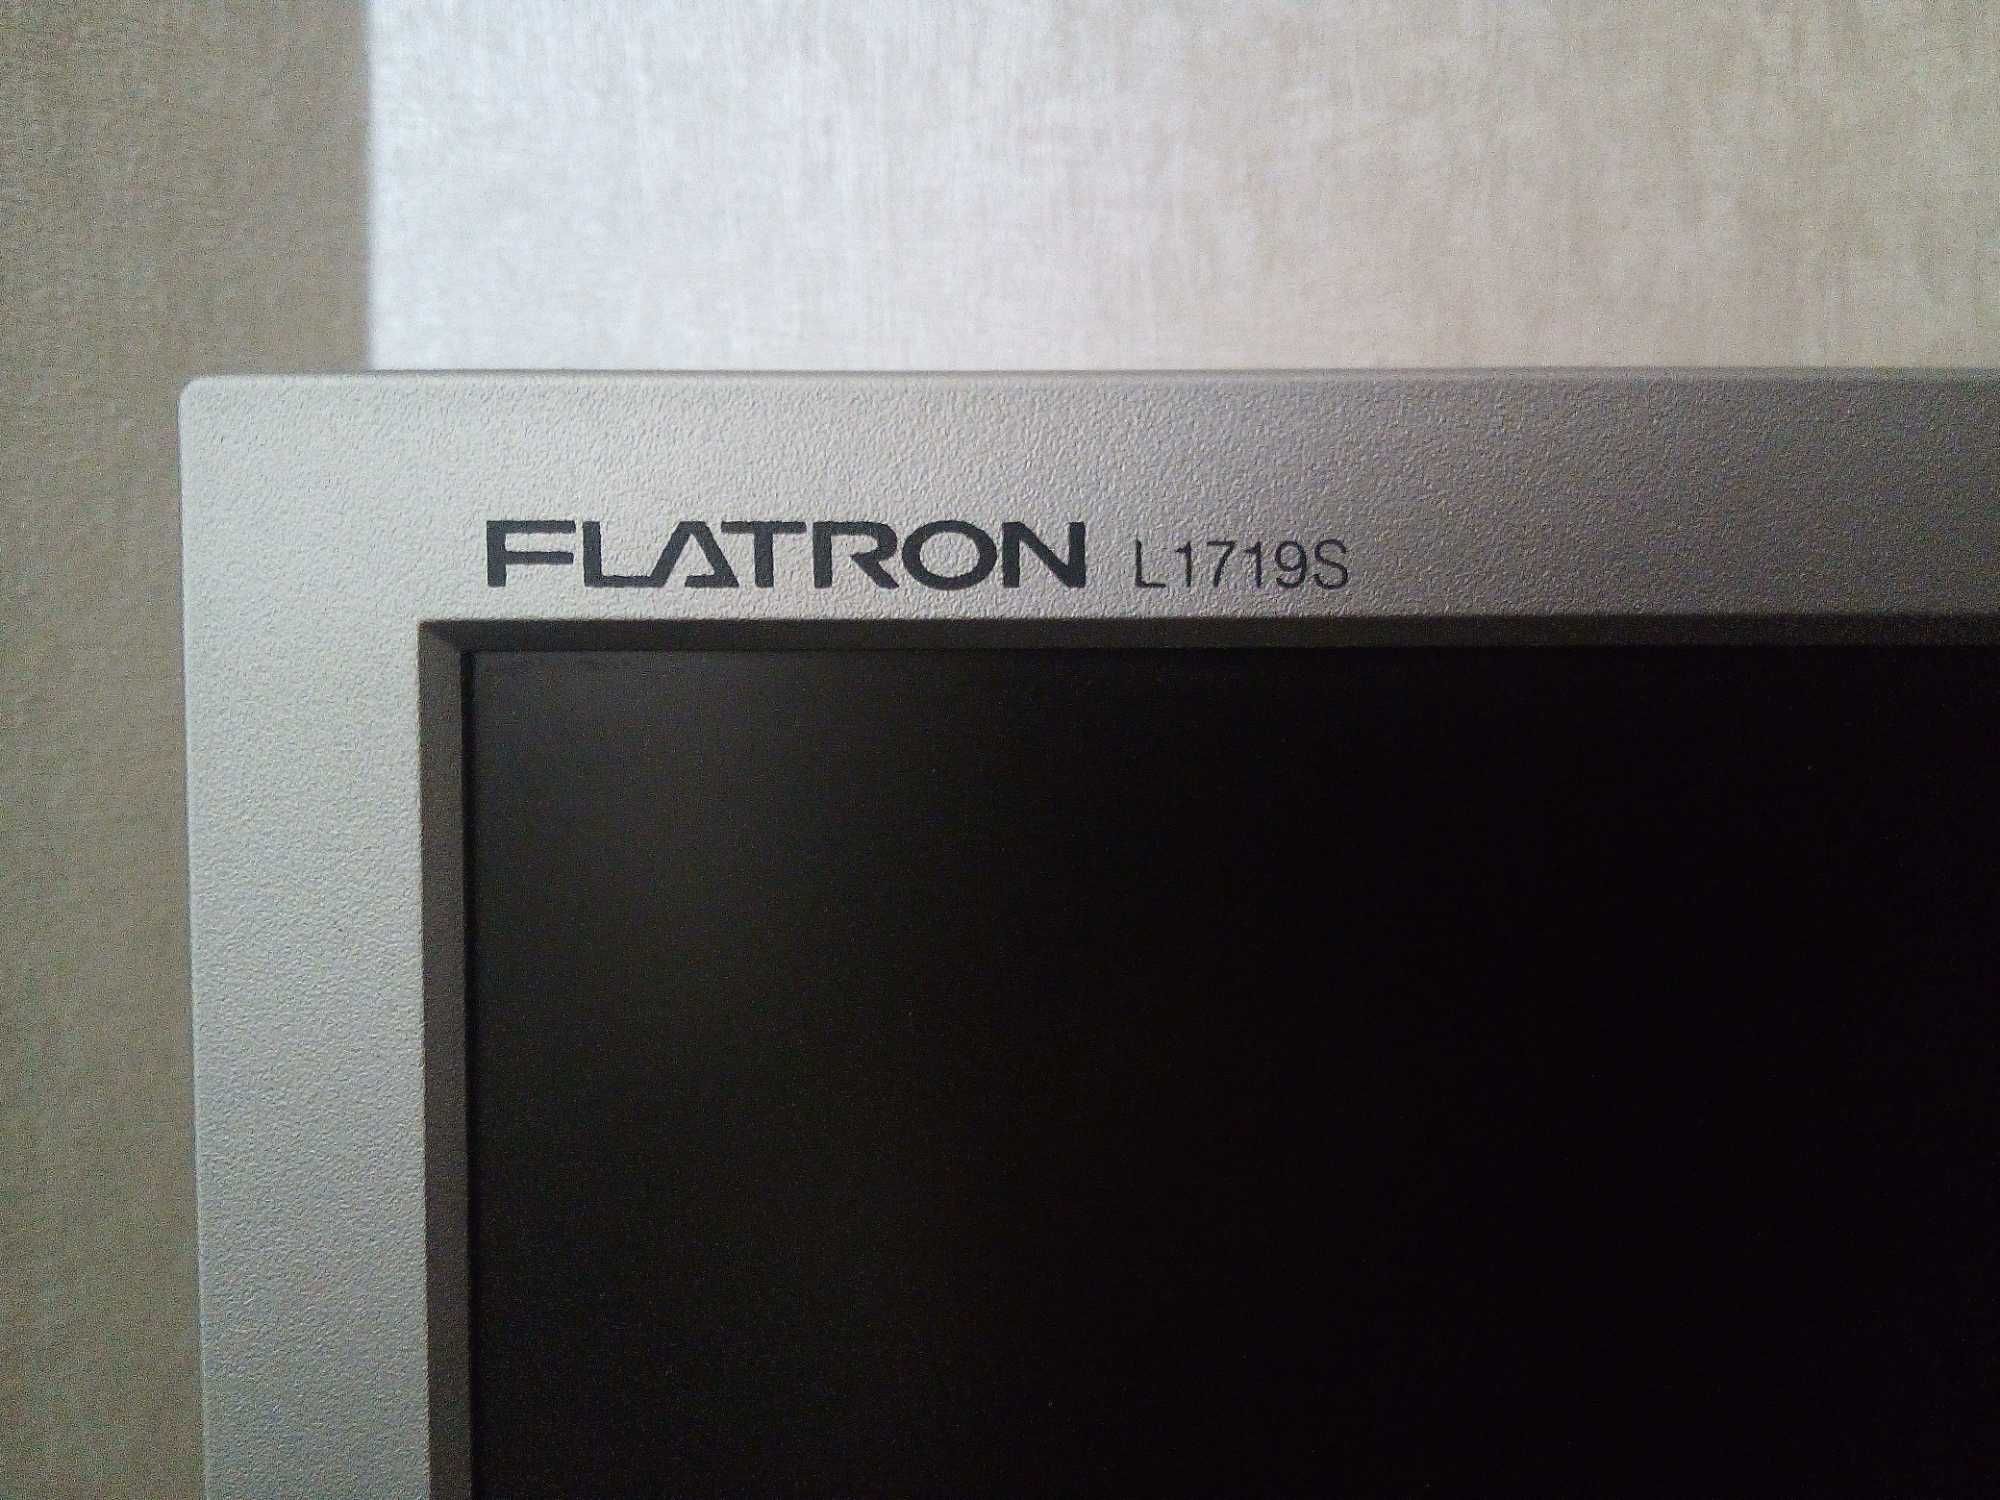 LG Flatron L1719S